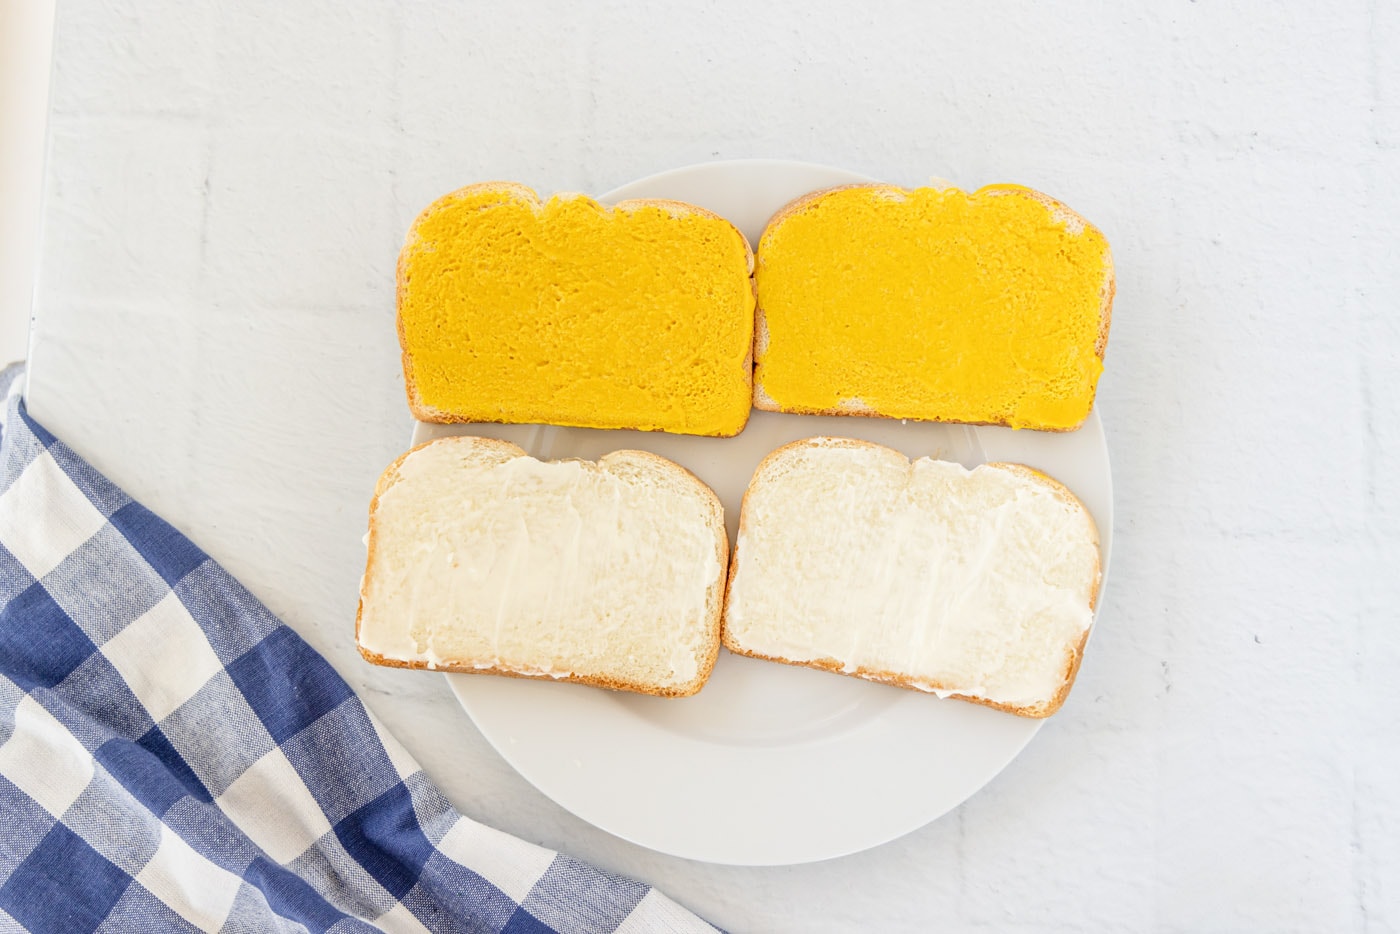 mayo and mustard on sandwich bread